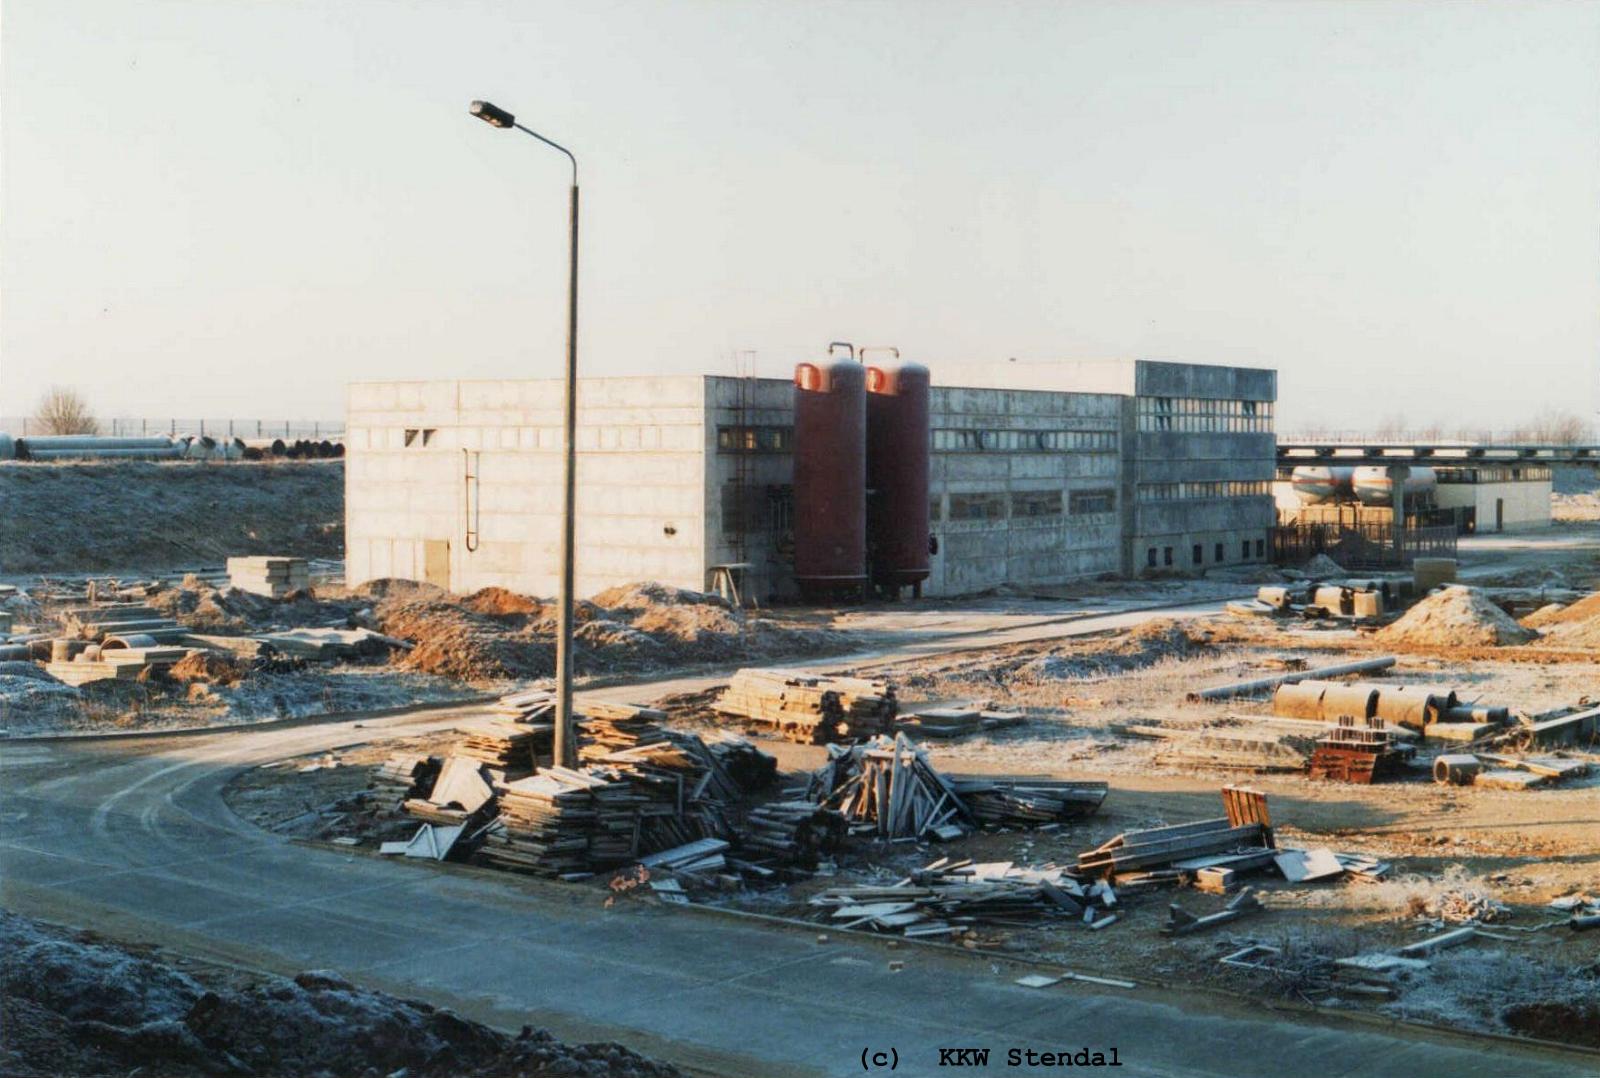  KKW Stendal, Baustelle 1990, Druckluftgebäude 